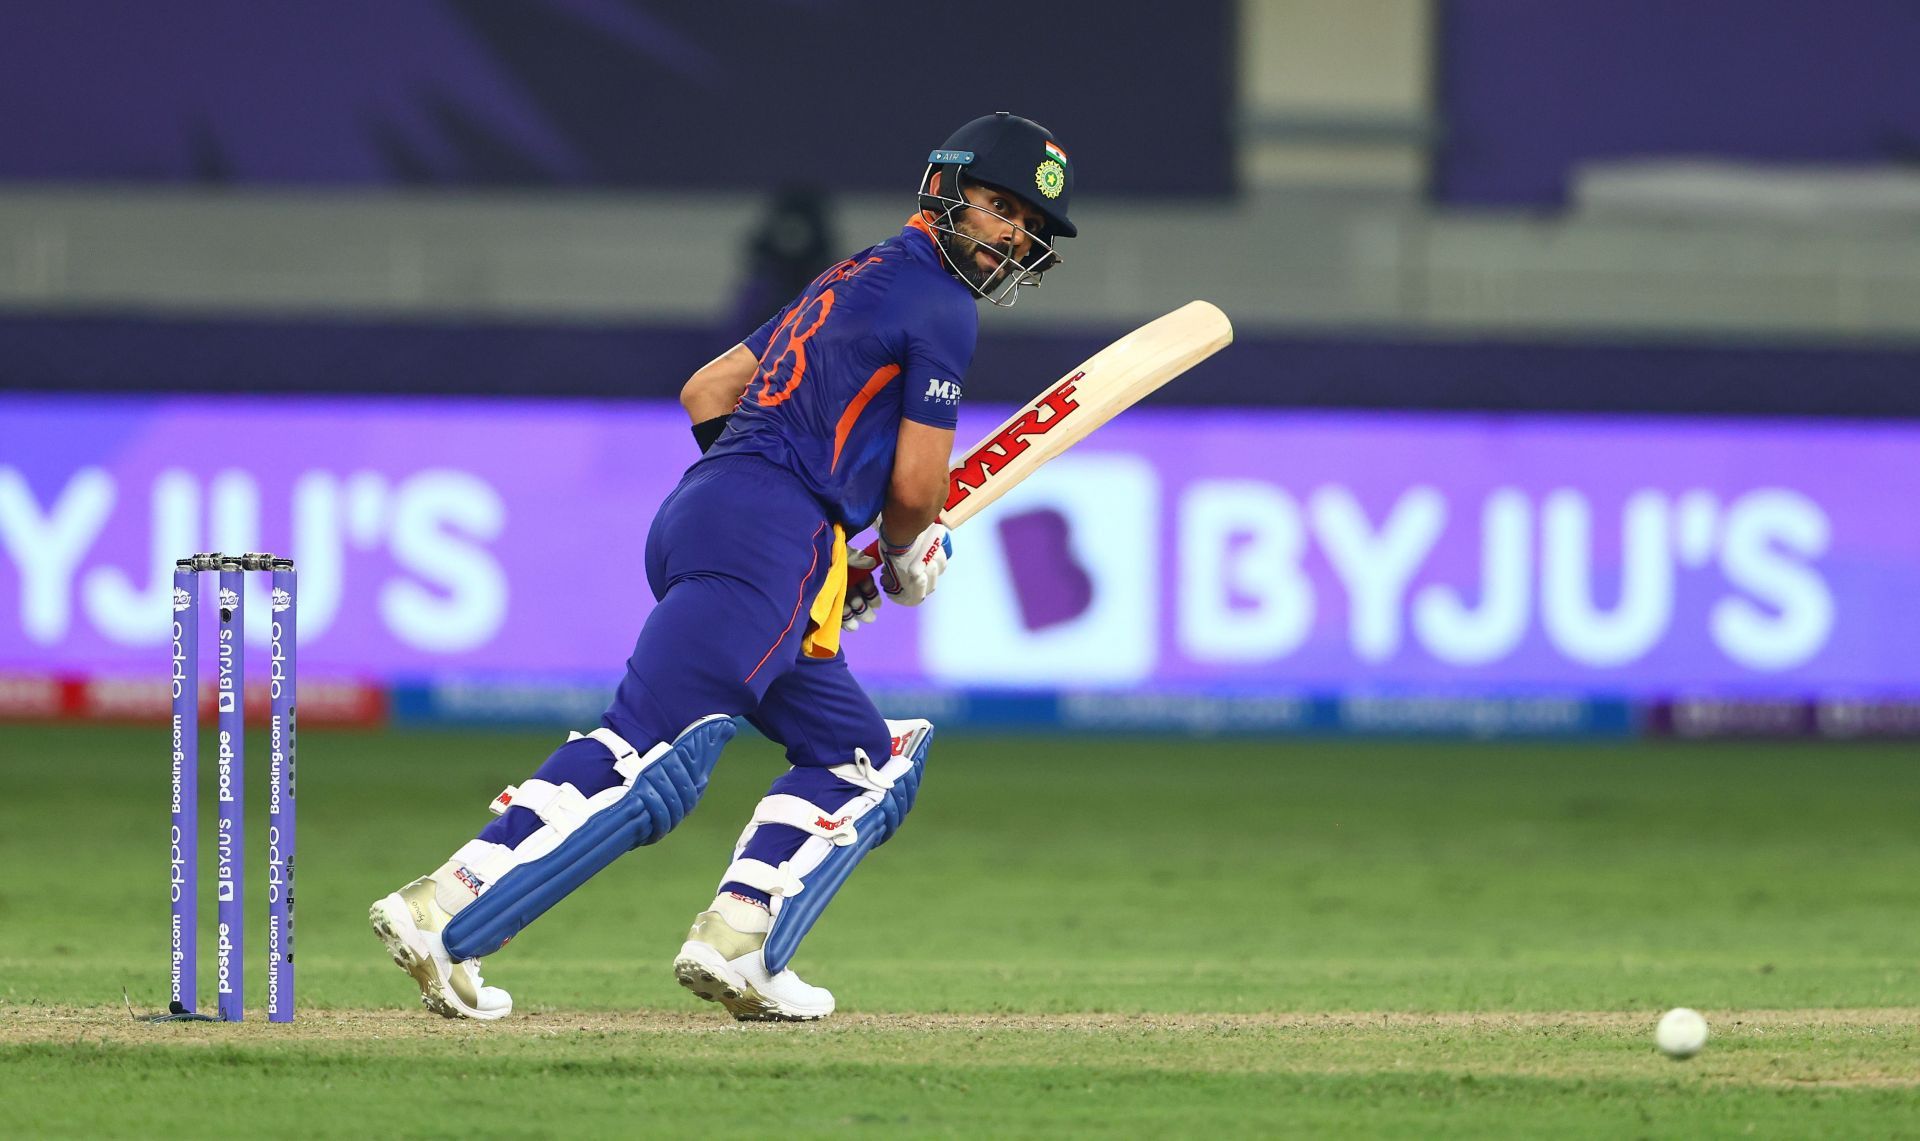 Virat Kohli scored a half-century in the T20 World Cup encounter against Pakistan